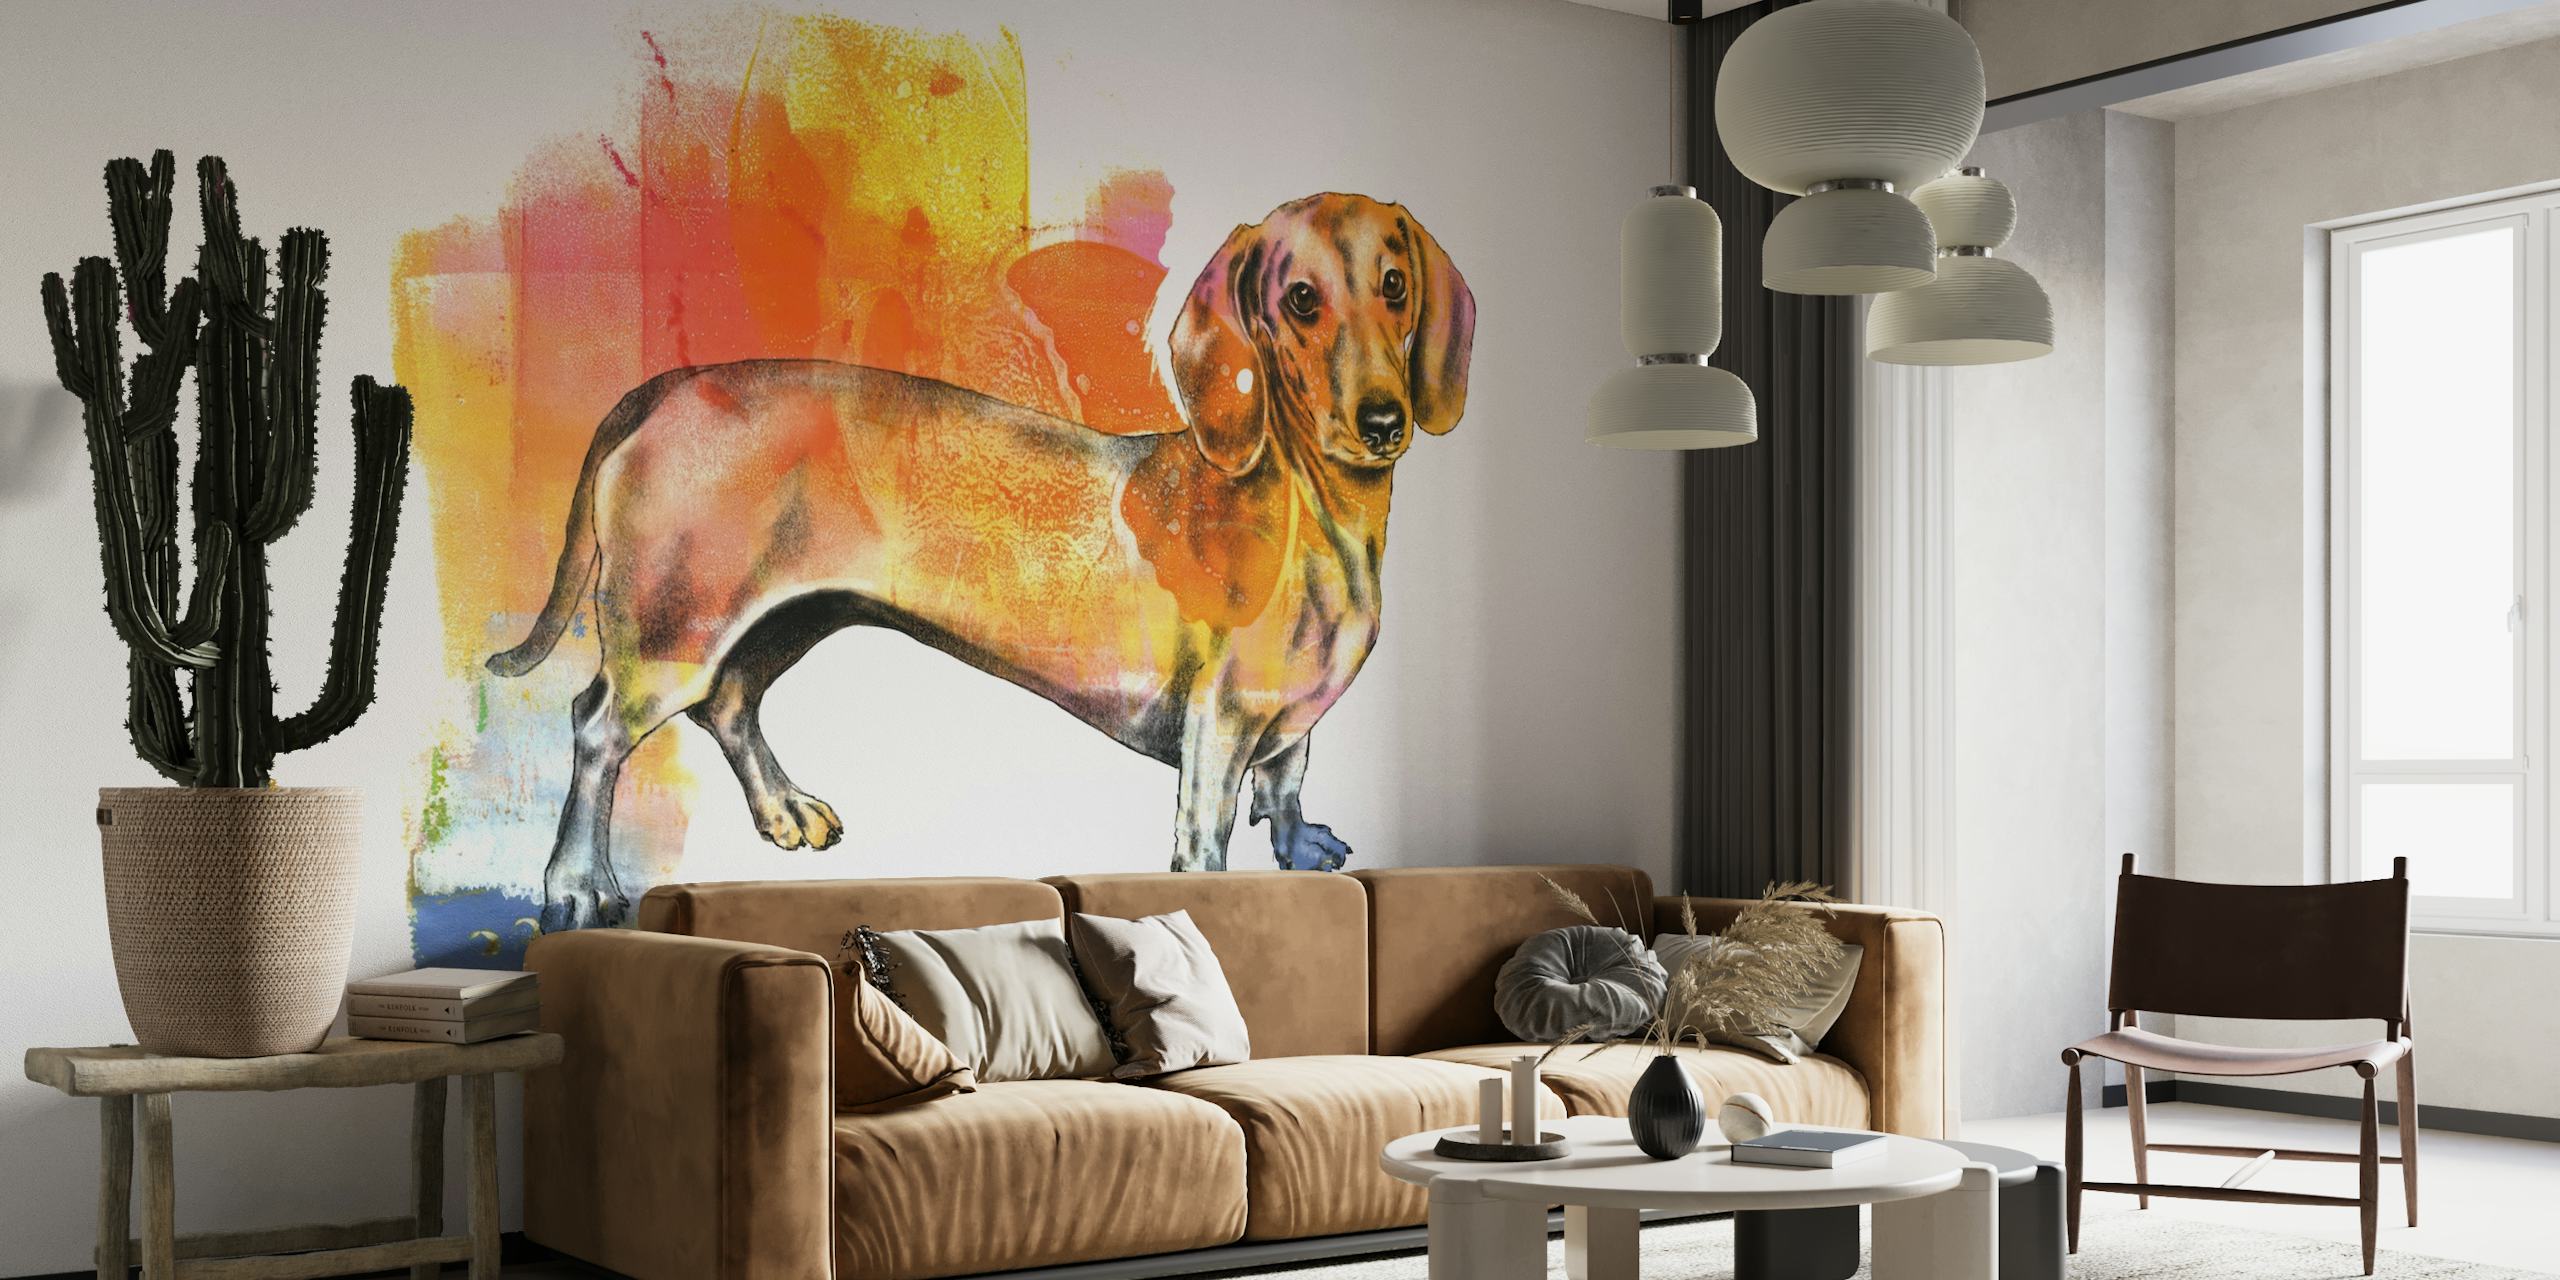 Wiener Dog Dachshund Art papel pintado